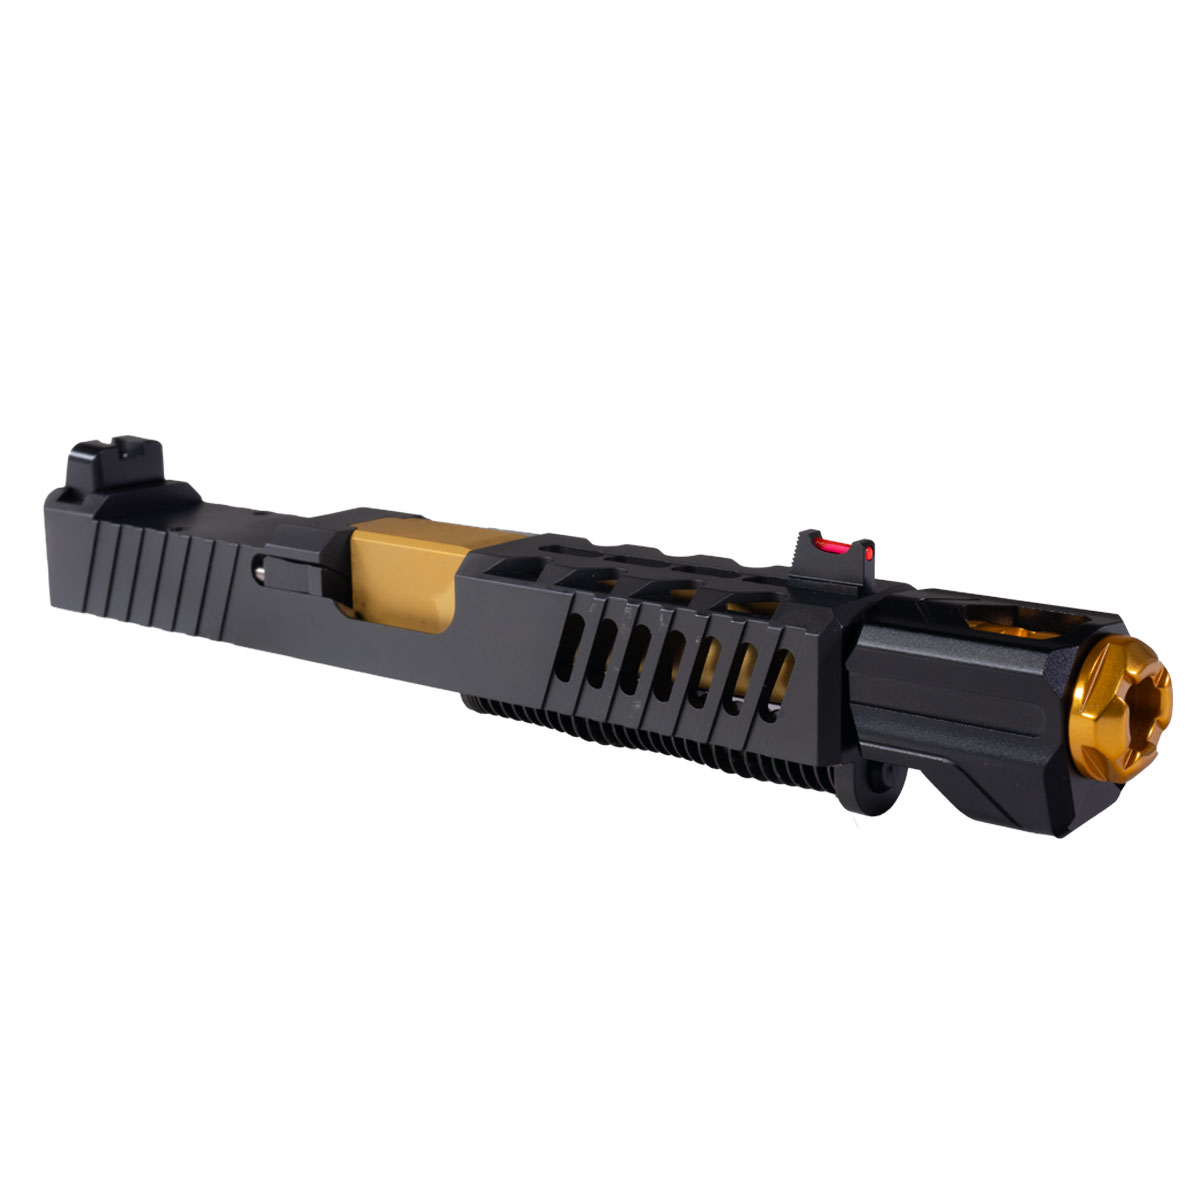 DD 'Pow w/ Tyrant Designs Compensator' 9mm Complete Slide Kit - Glock 19 Gen 1-3 Compatible